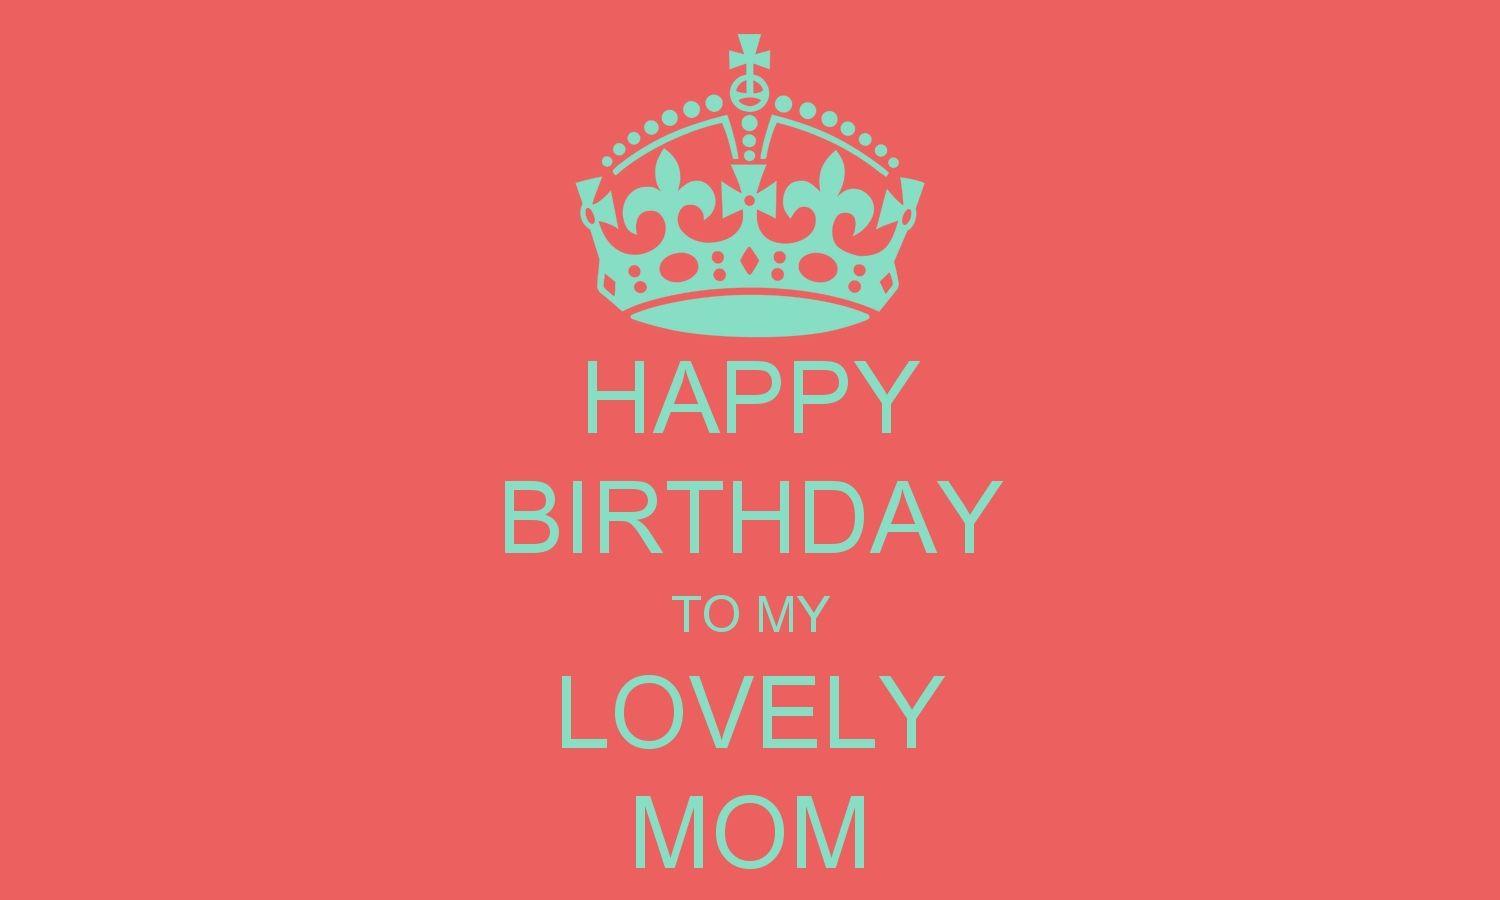 Happy Birthday Mom Wallpaper 100% Quality HD. Happy Birthday Mom